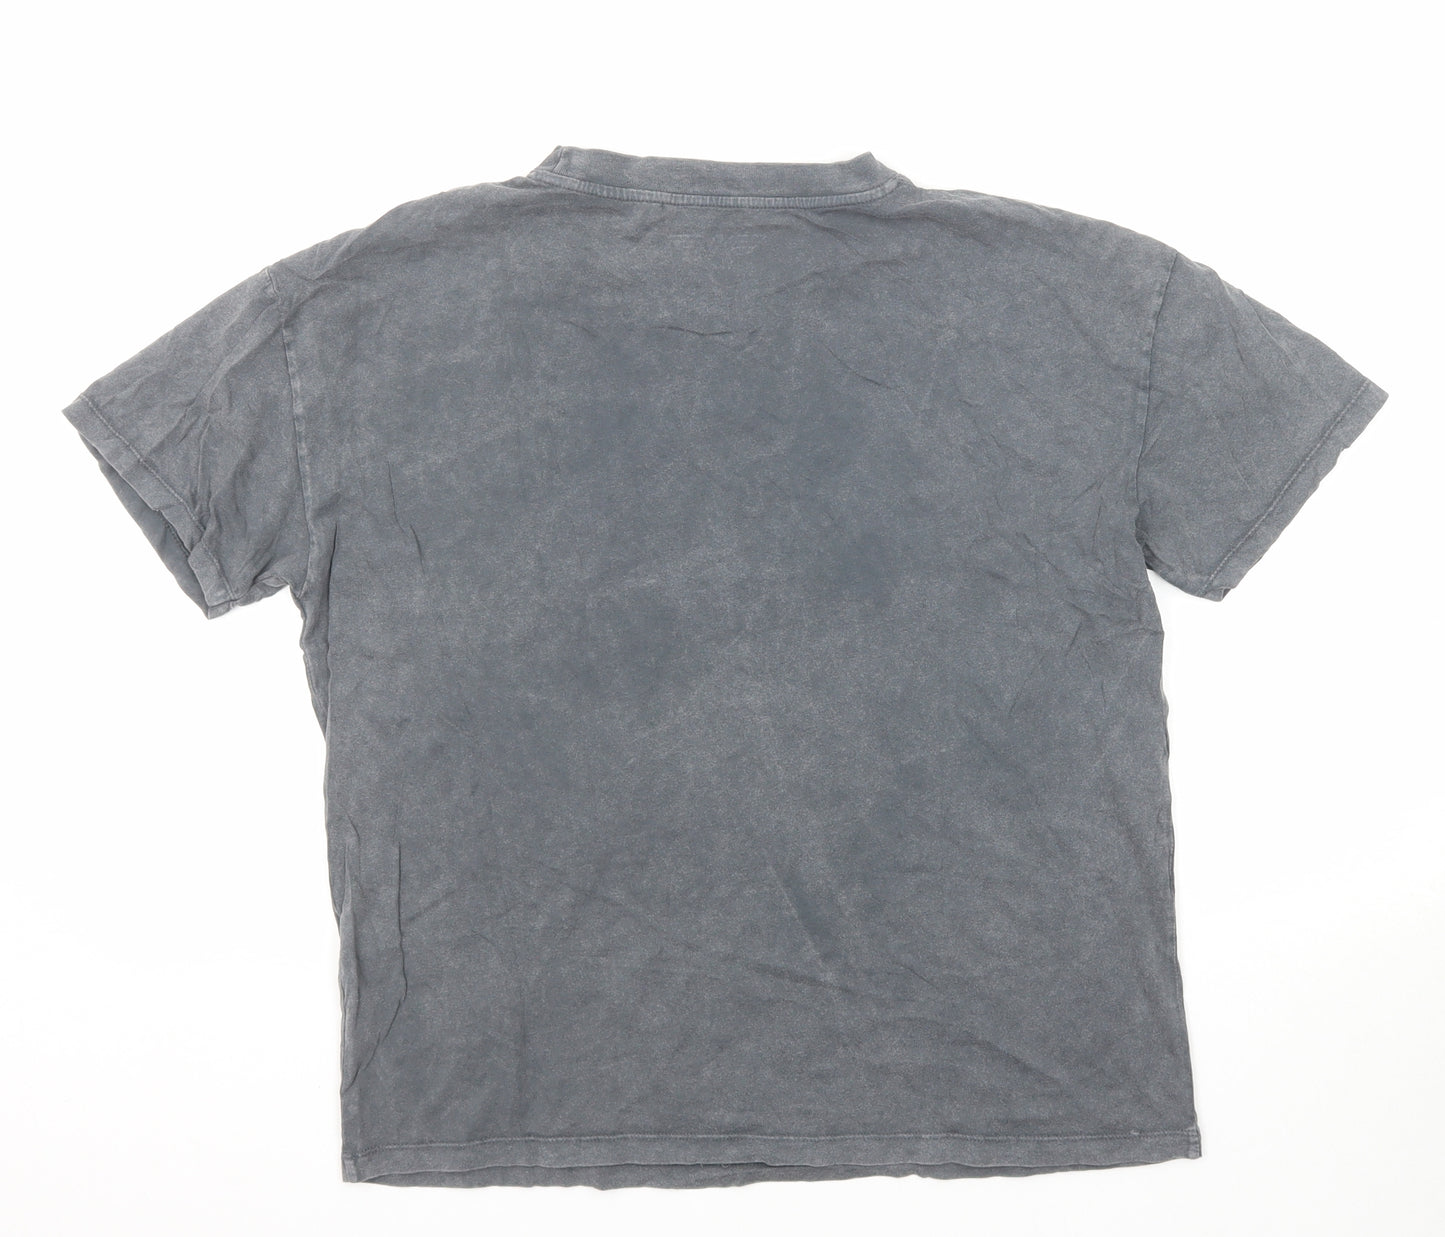 Pull&Bear Womens Grey Cotton Basic T-Shirt Size S Crew Neck - Wonder Woman